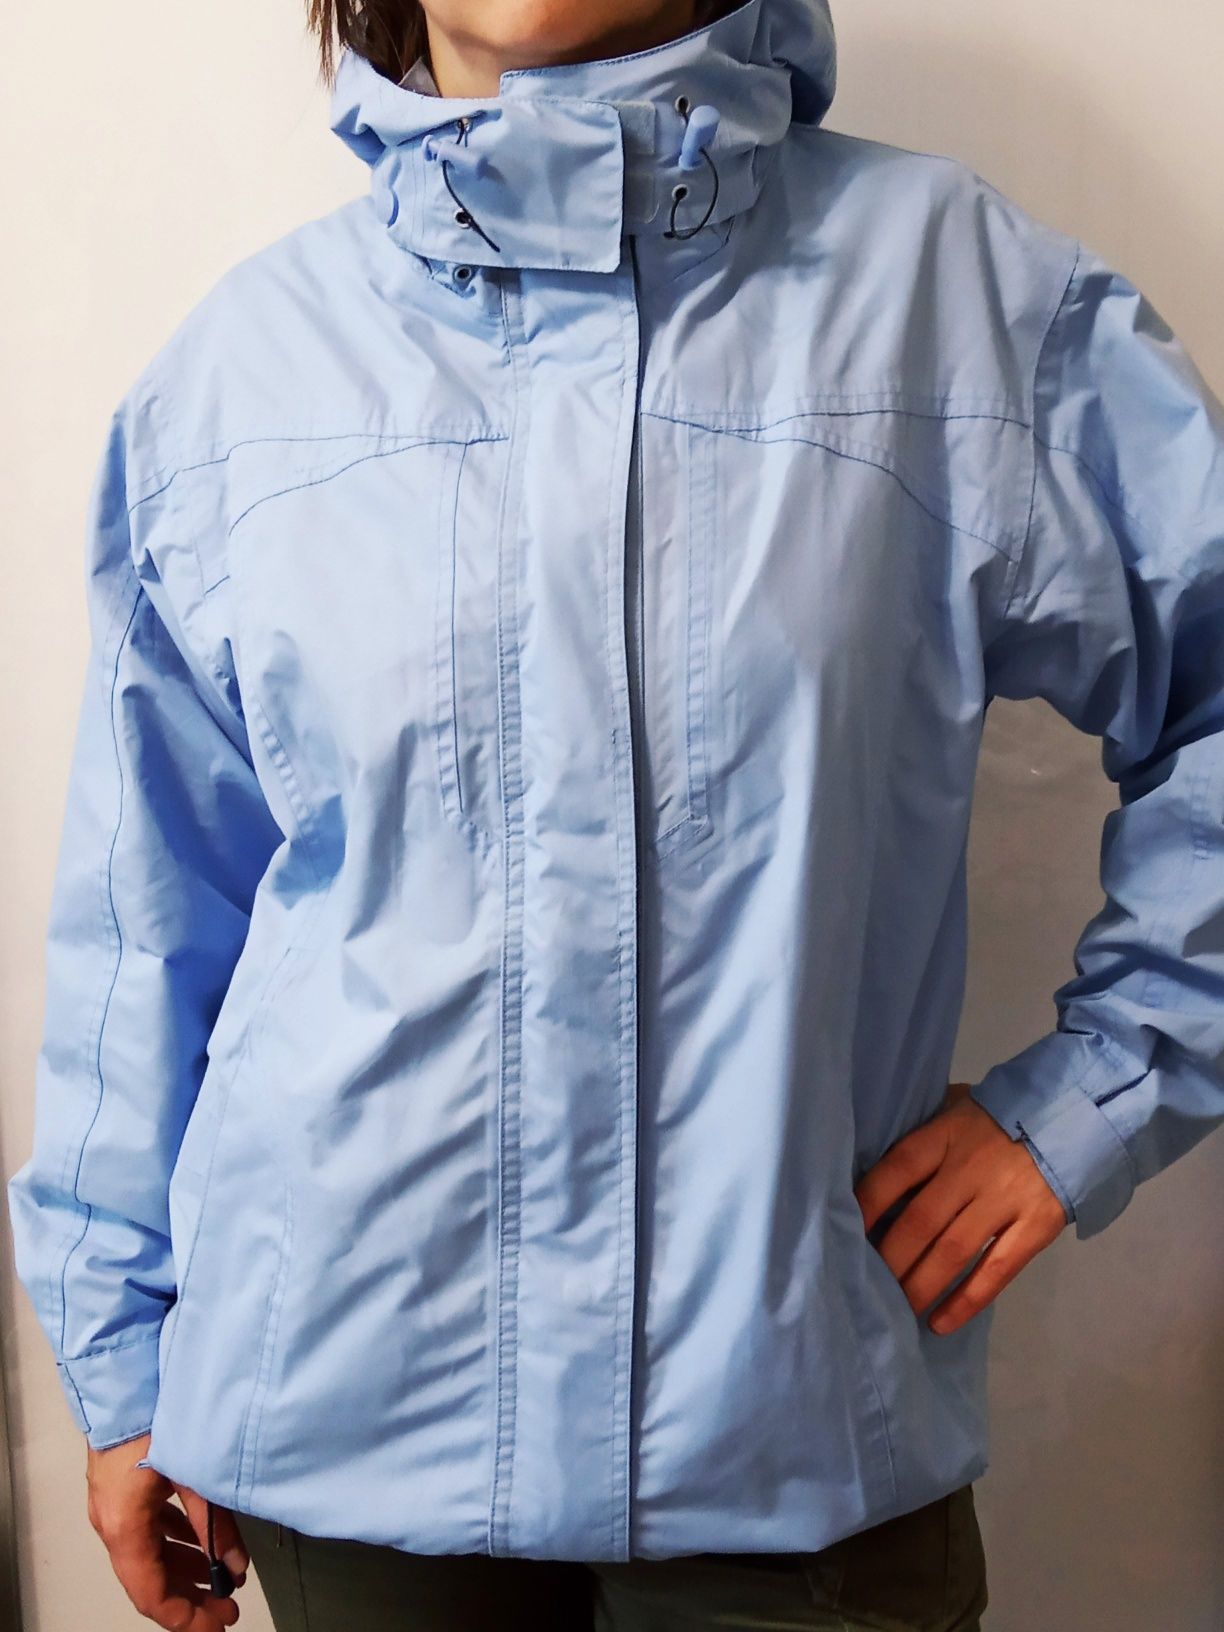 Курточка Arctic Storm 46-48 спортивна куртка вітровка жіноча/женская